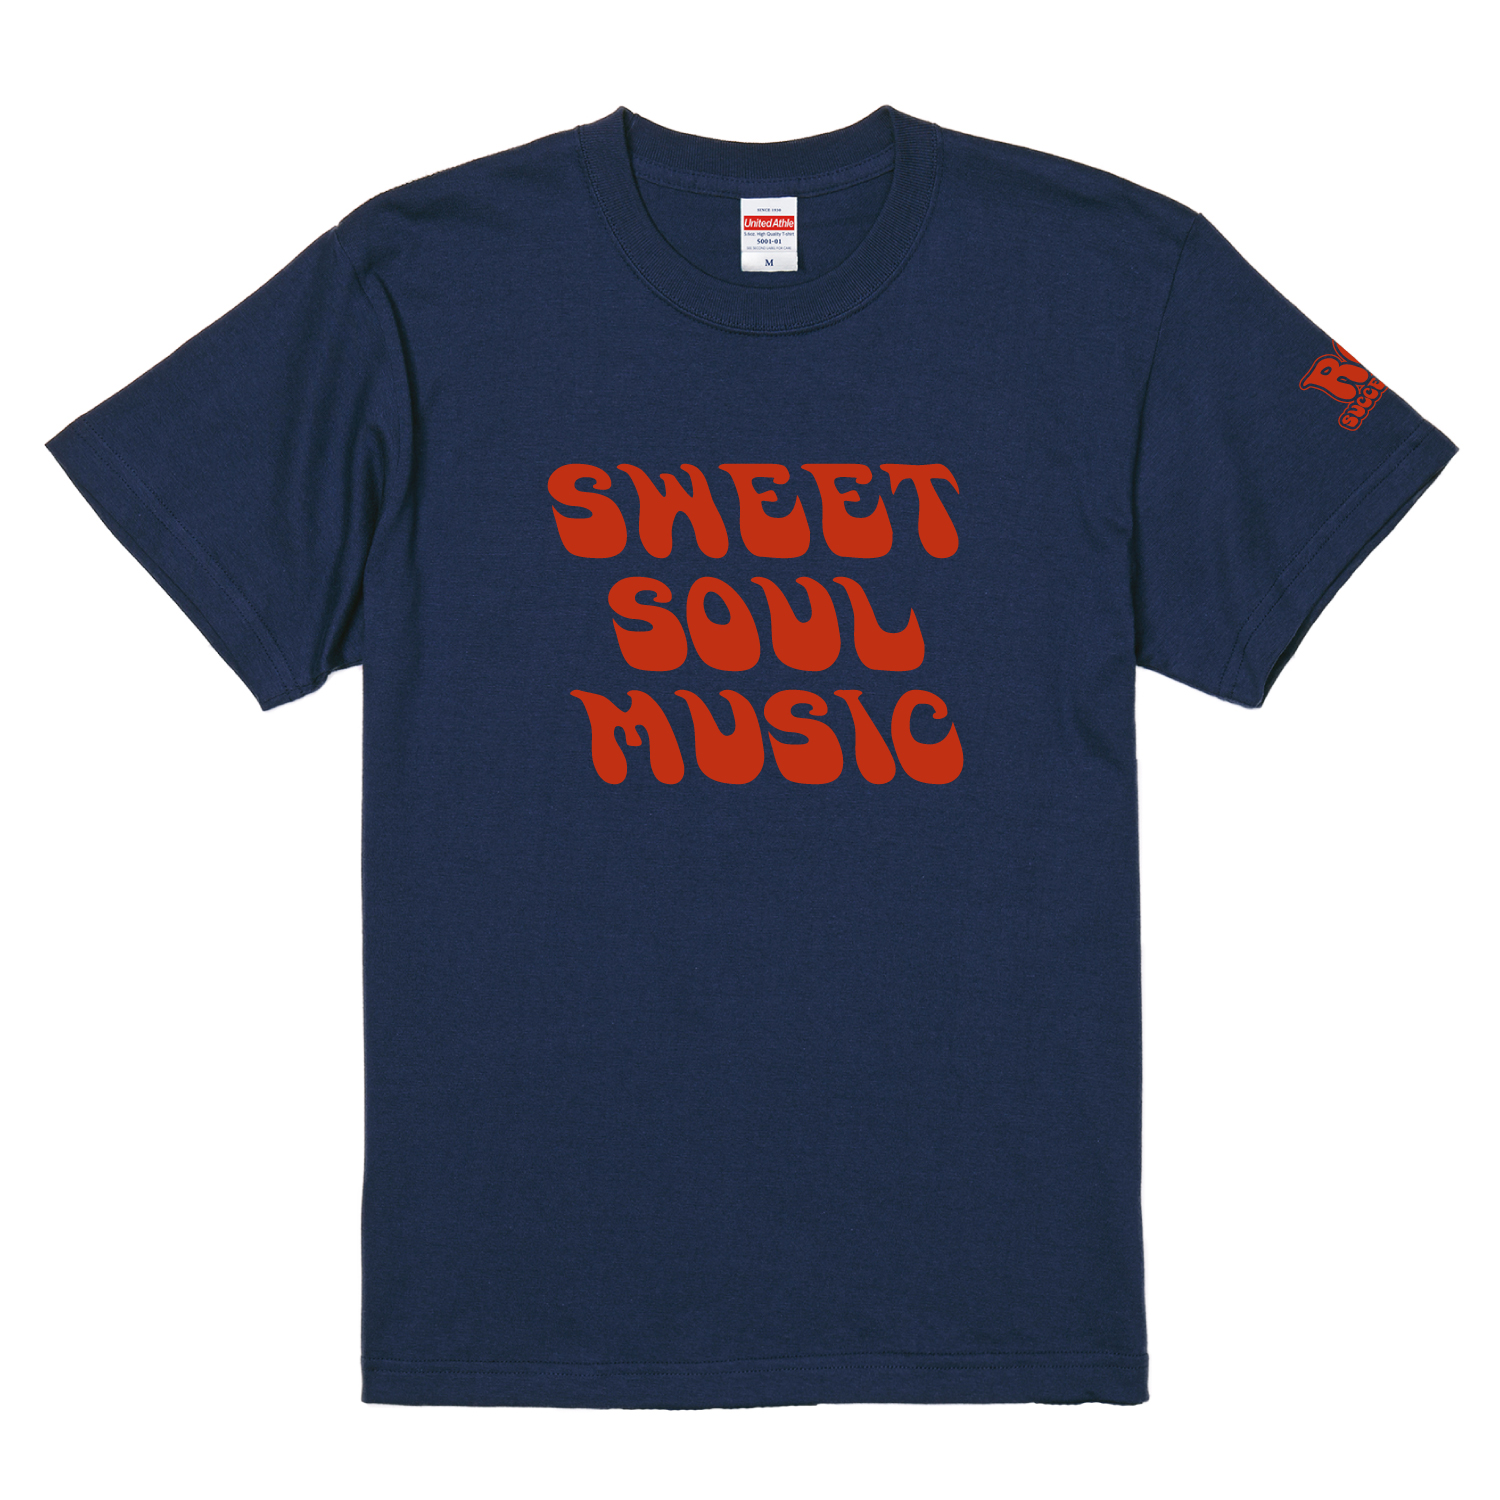 SWEET SOUL MUSIC Tシャツ(ネイビー)